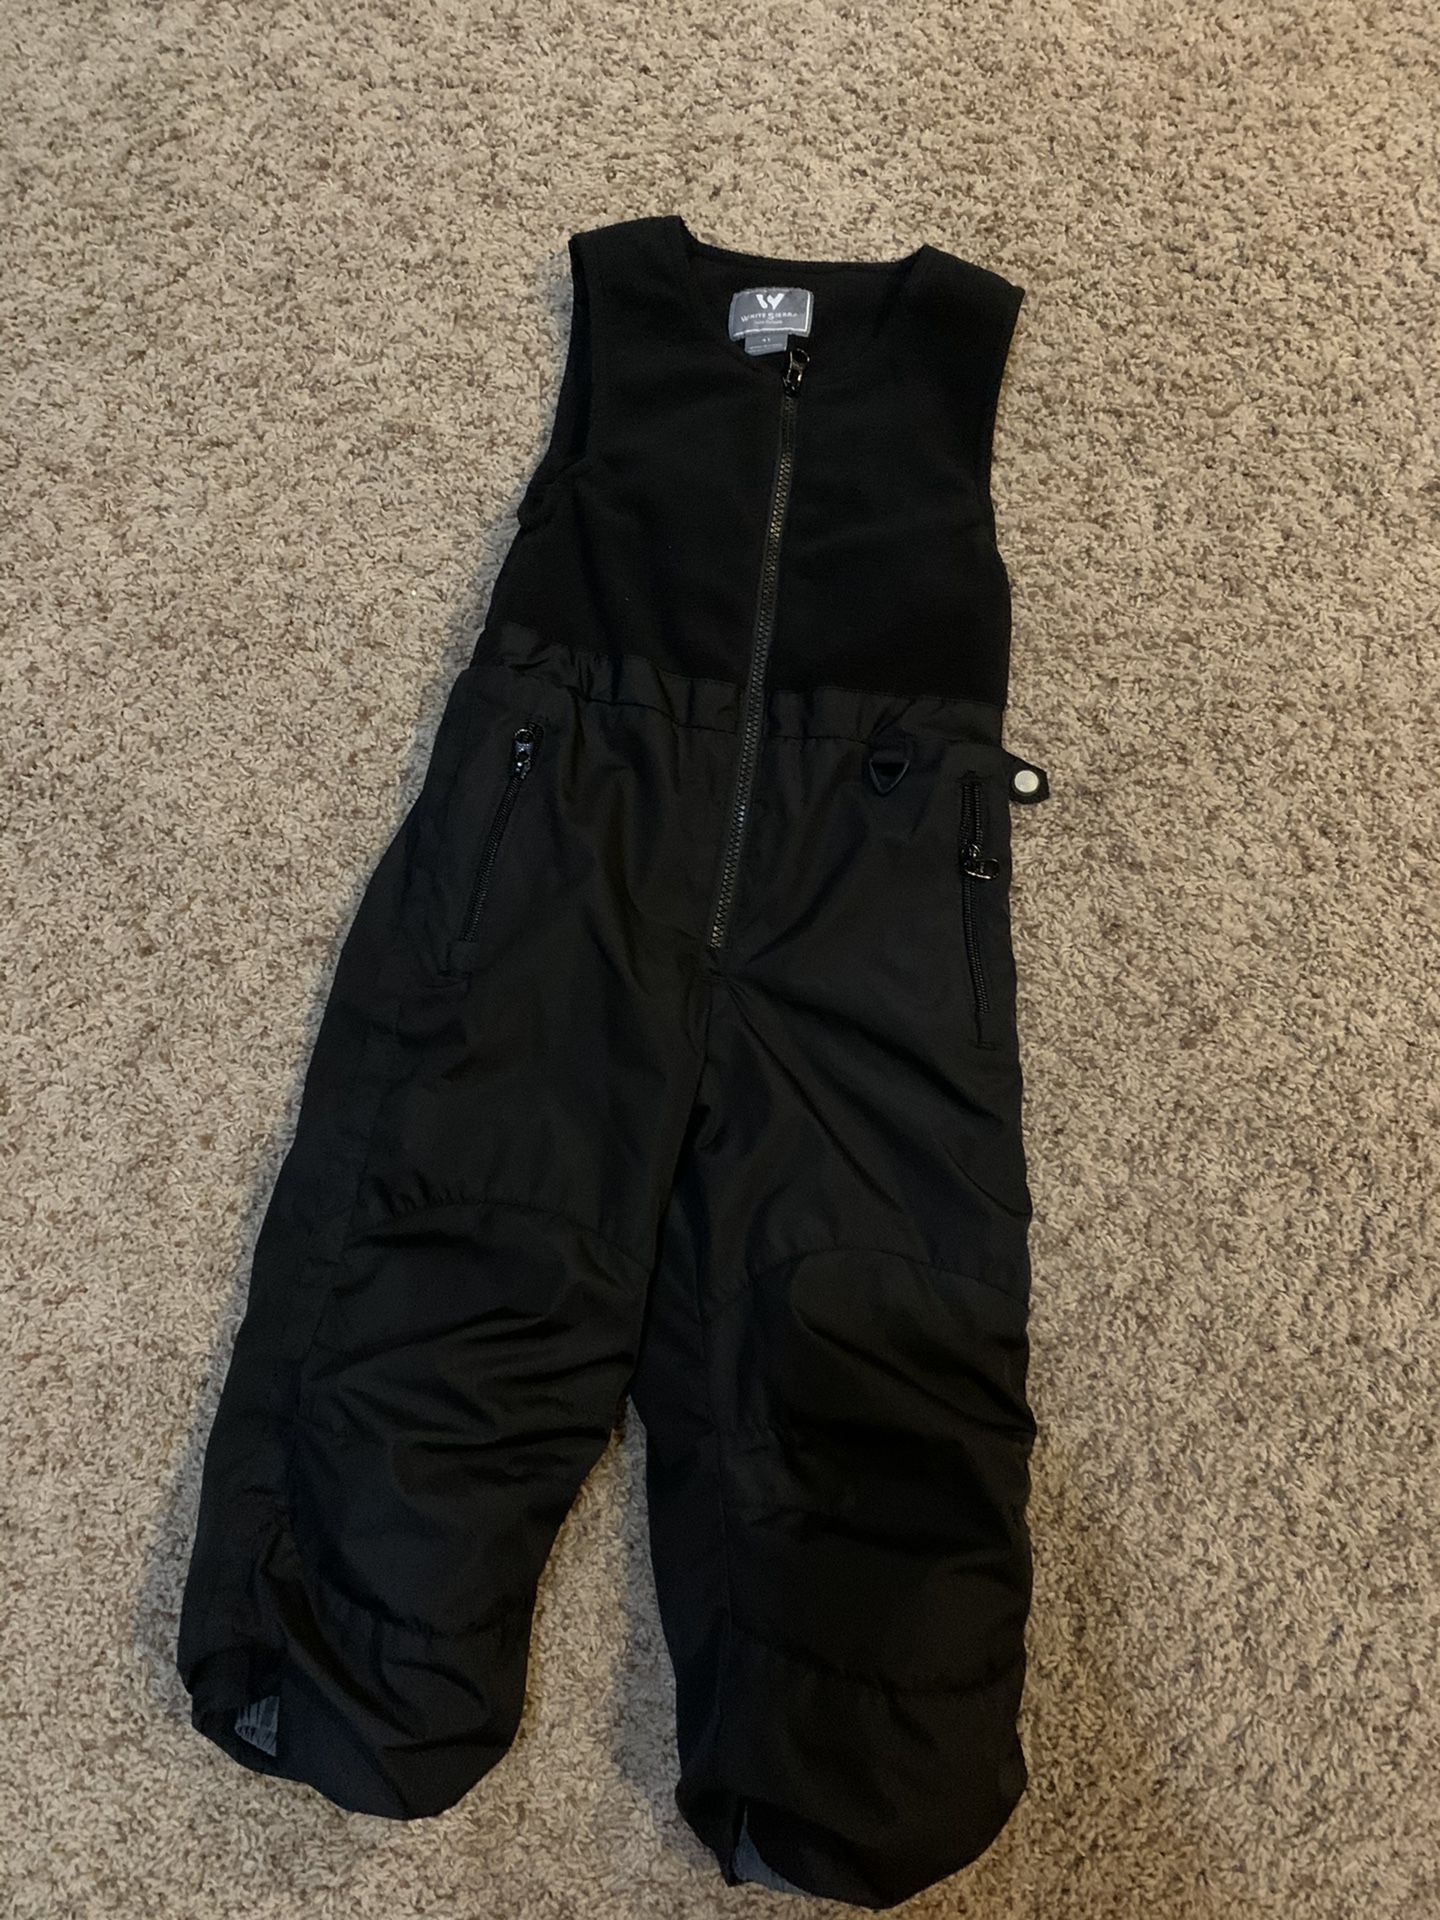 4T black bib overall snow pants (white Sierra)